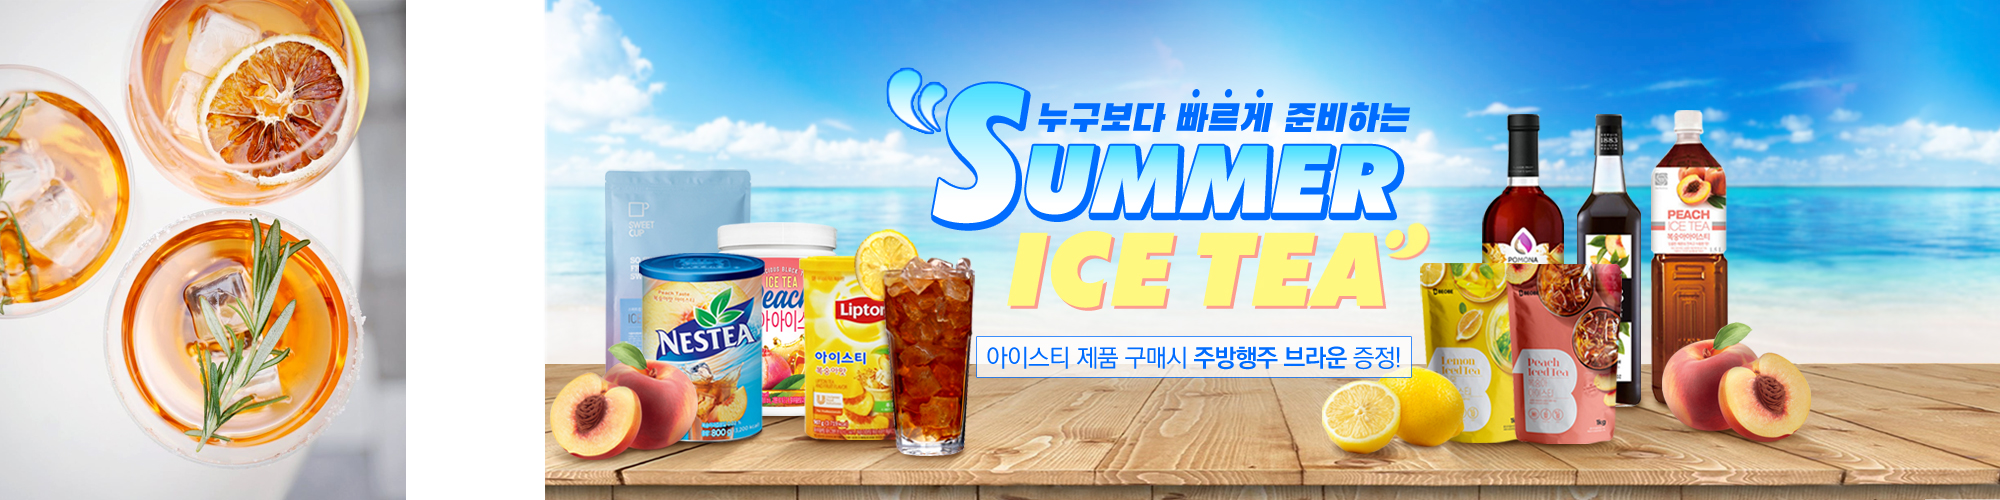 Summer_IceTea_2000